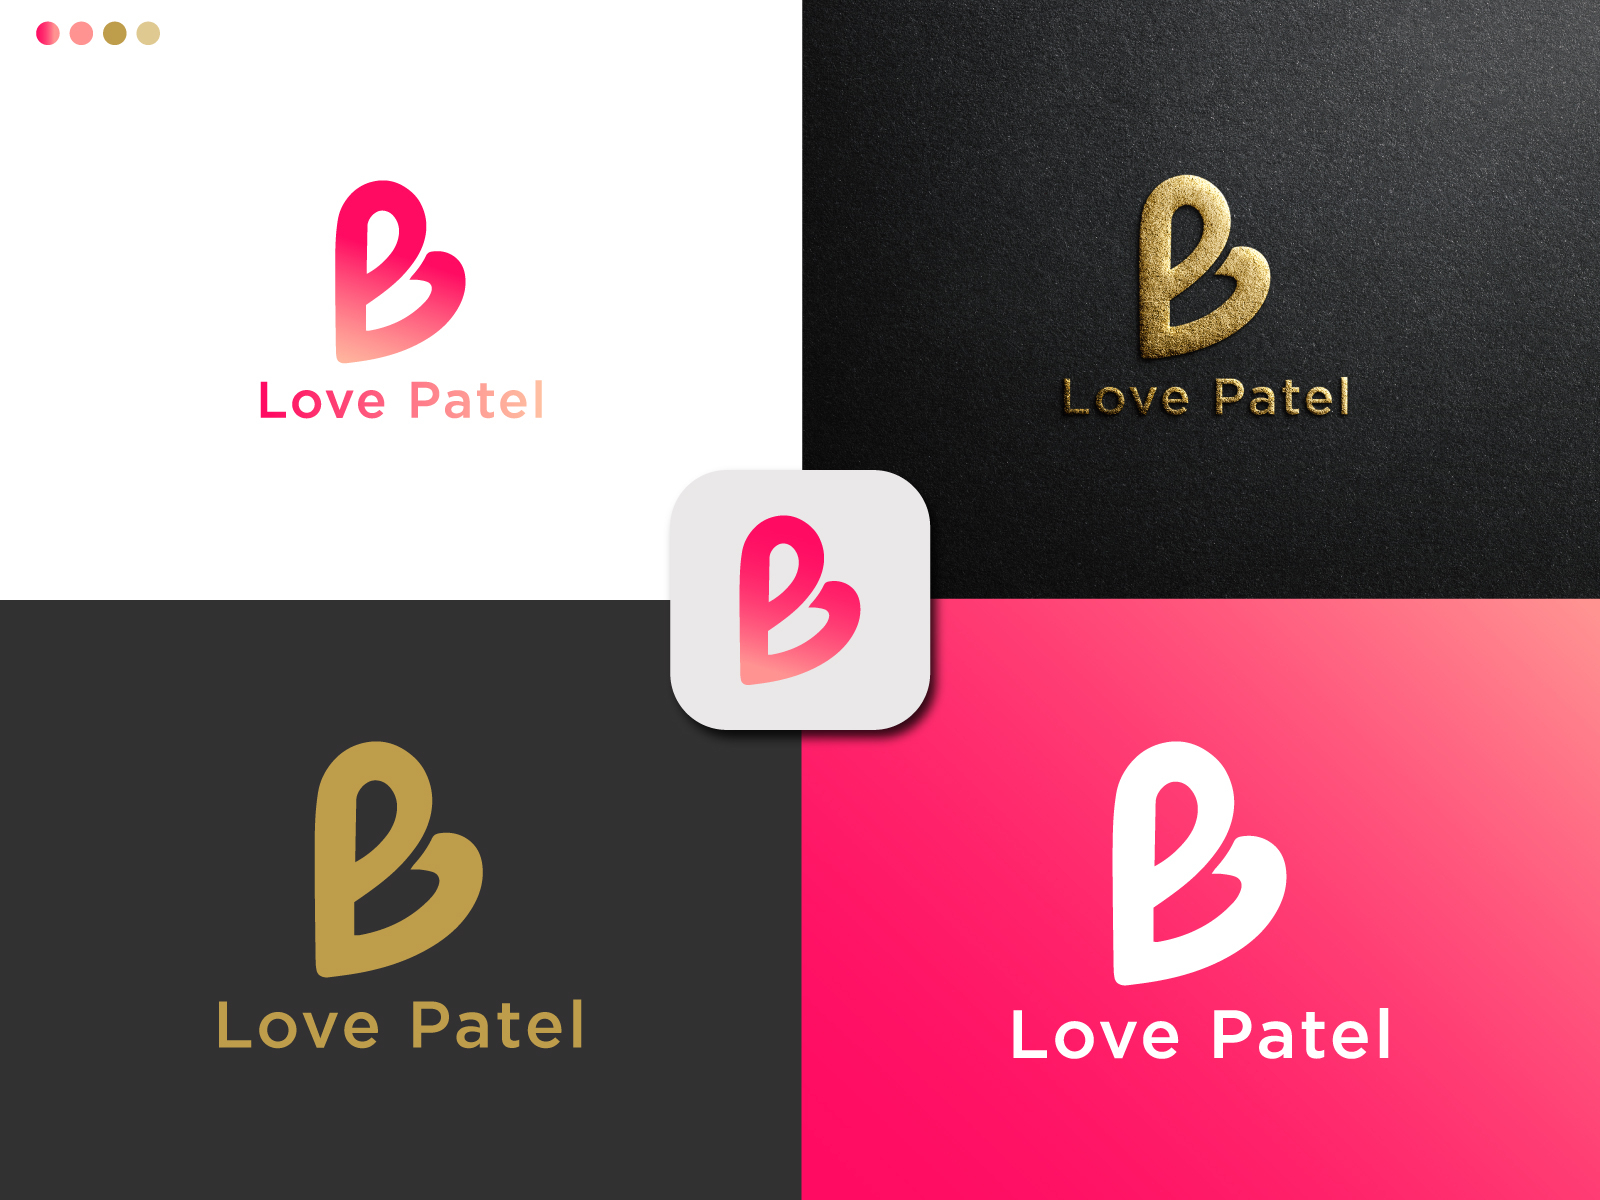 Rutvik Patel - Logo Designer - Freelance | LinkedIn